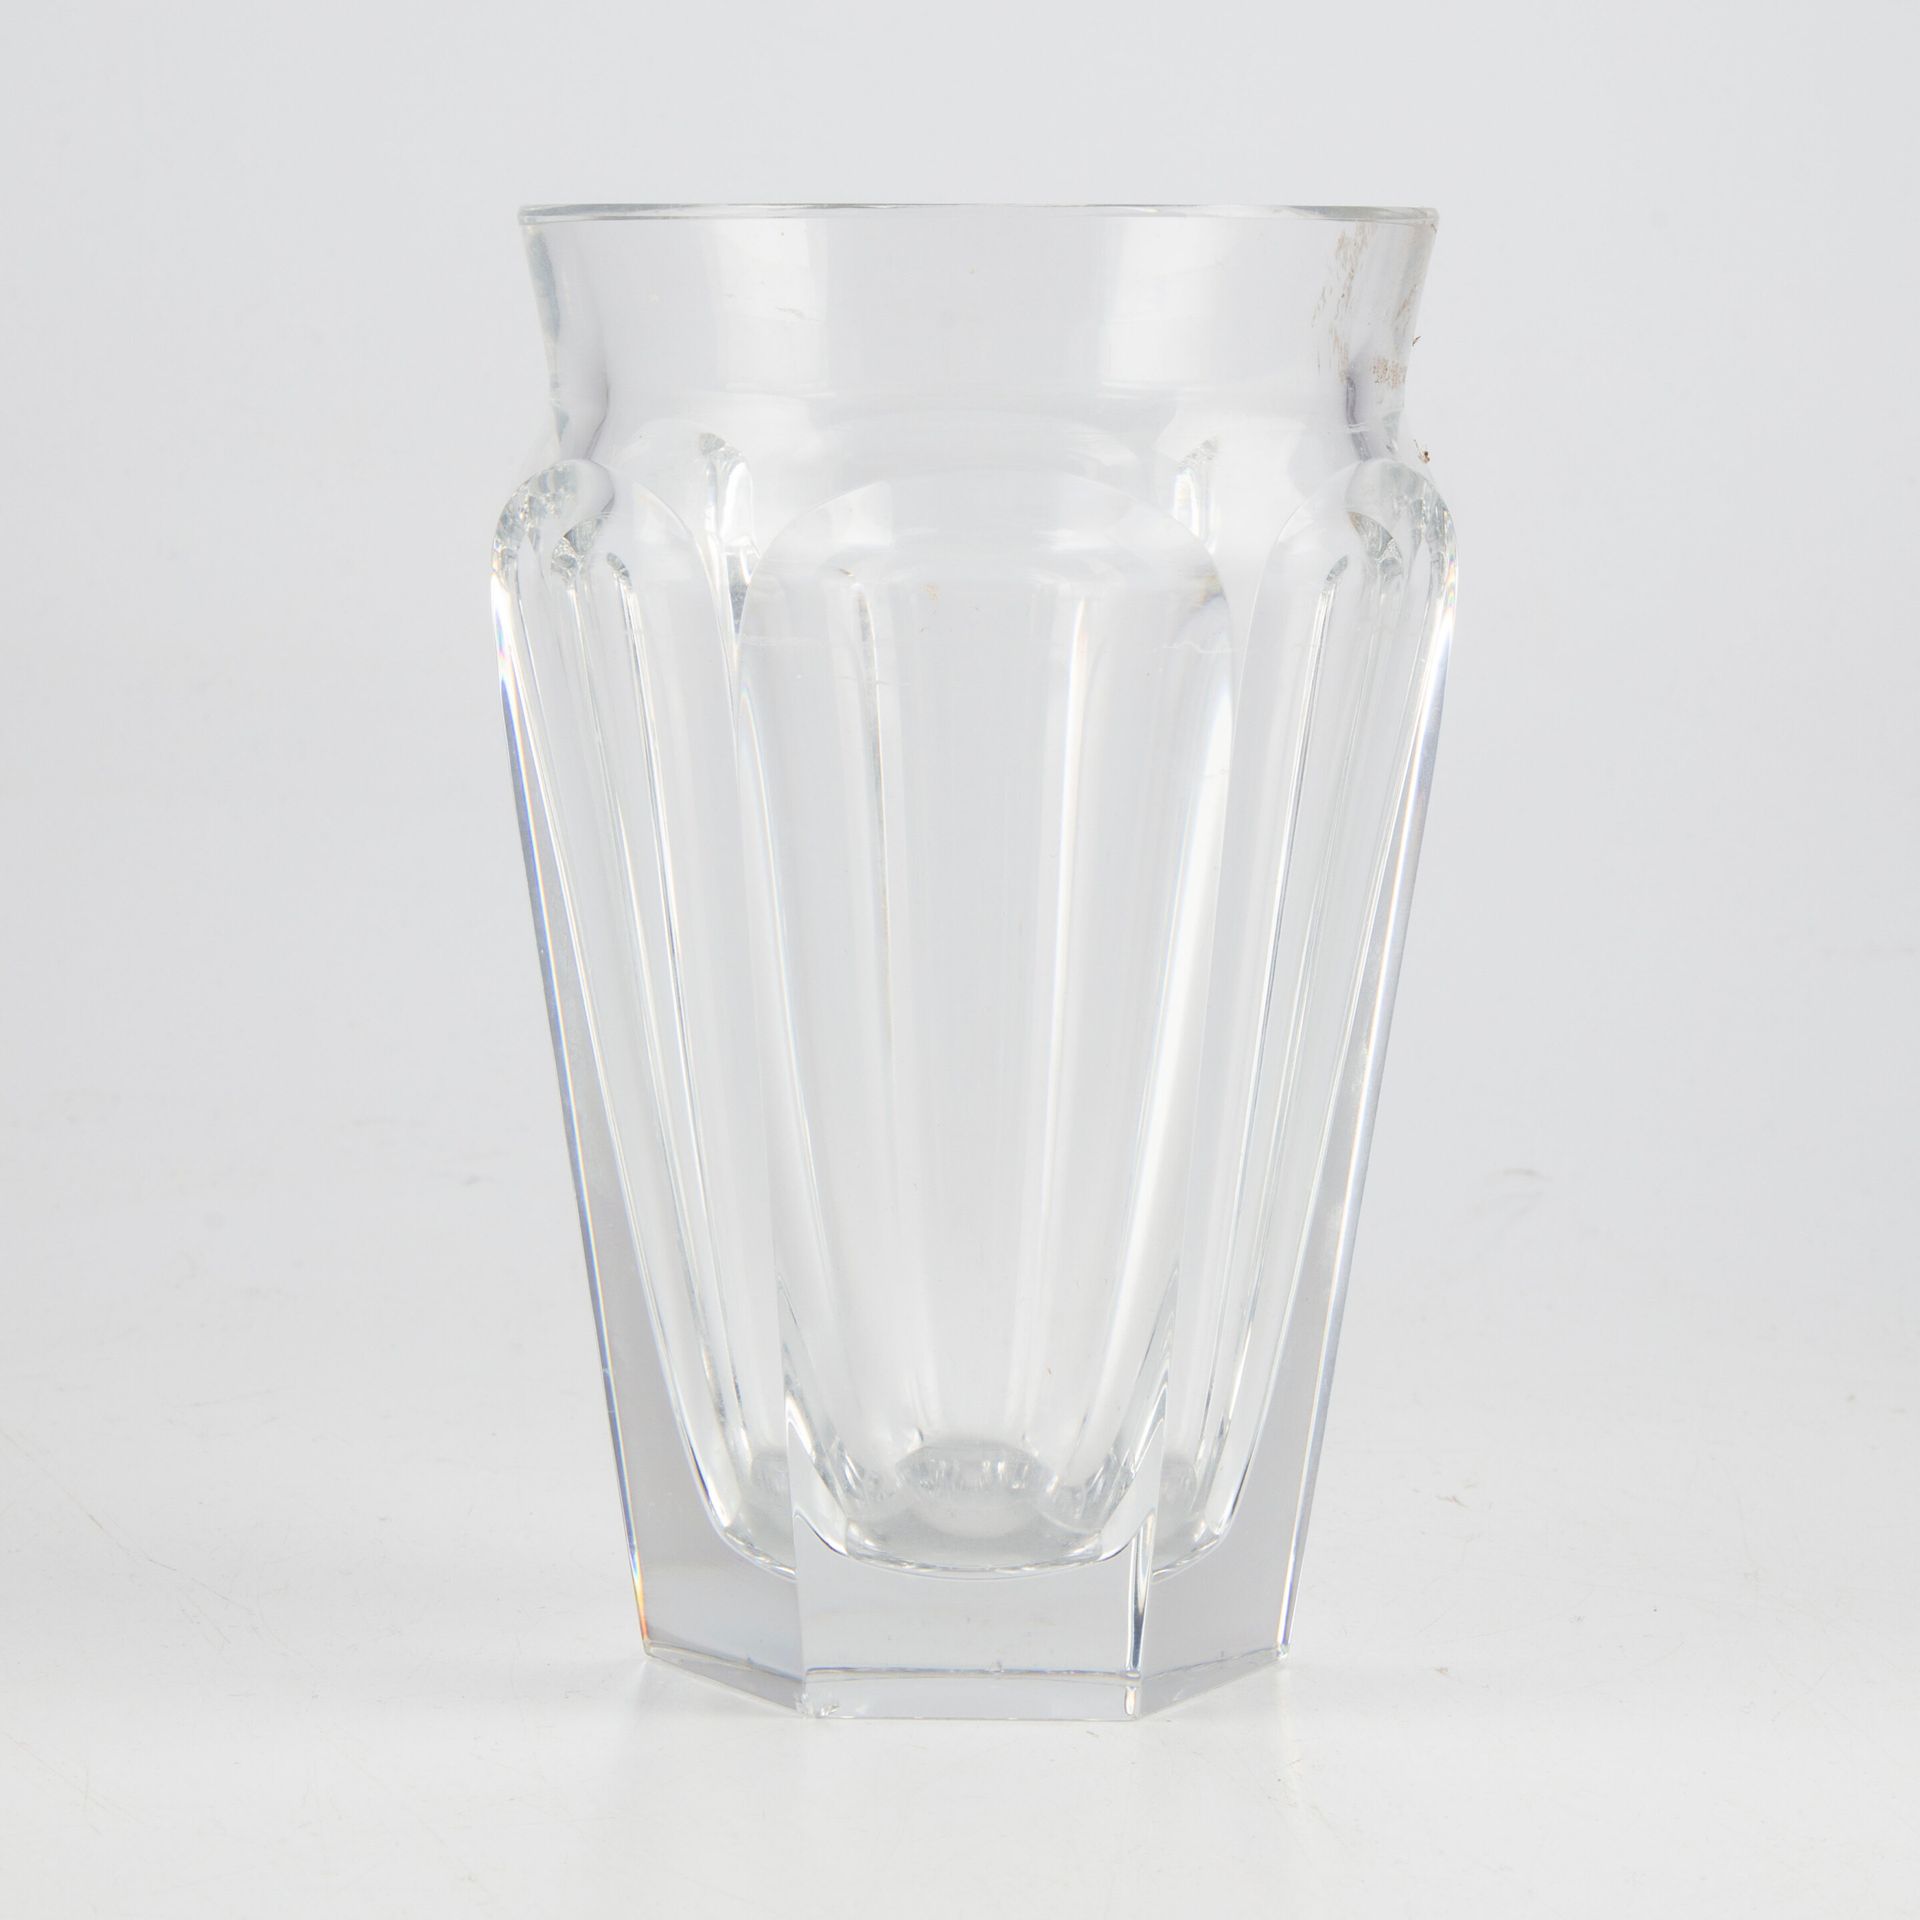 BACCARAT BACCARAT

Vase en cristal taillé 

Marqué

H.: 17 cm

Usures